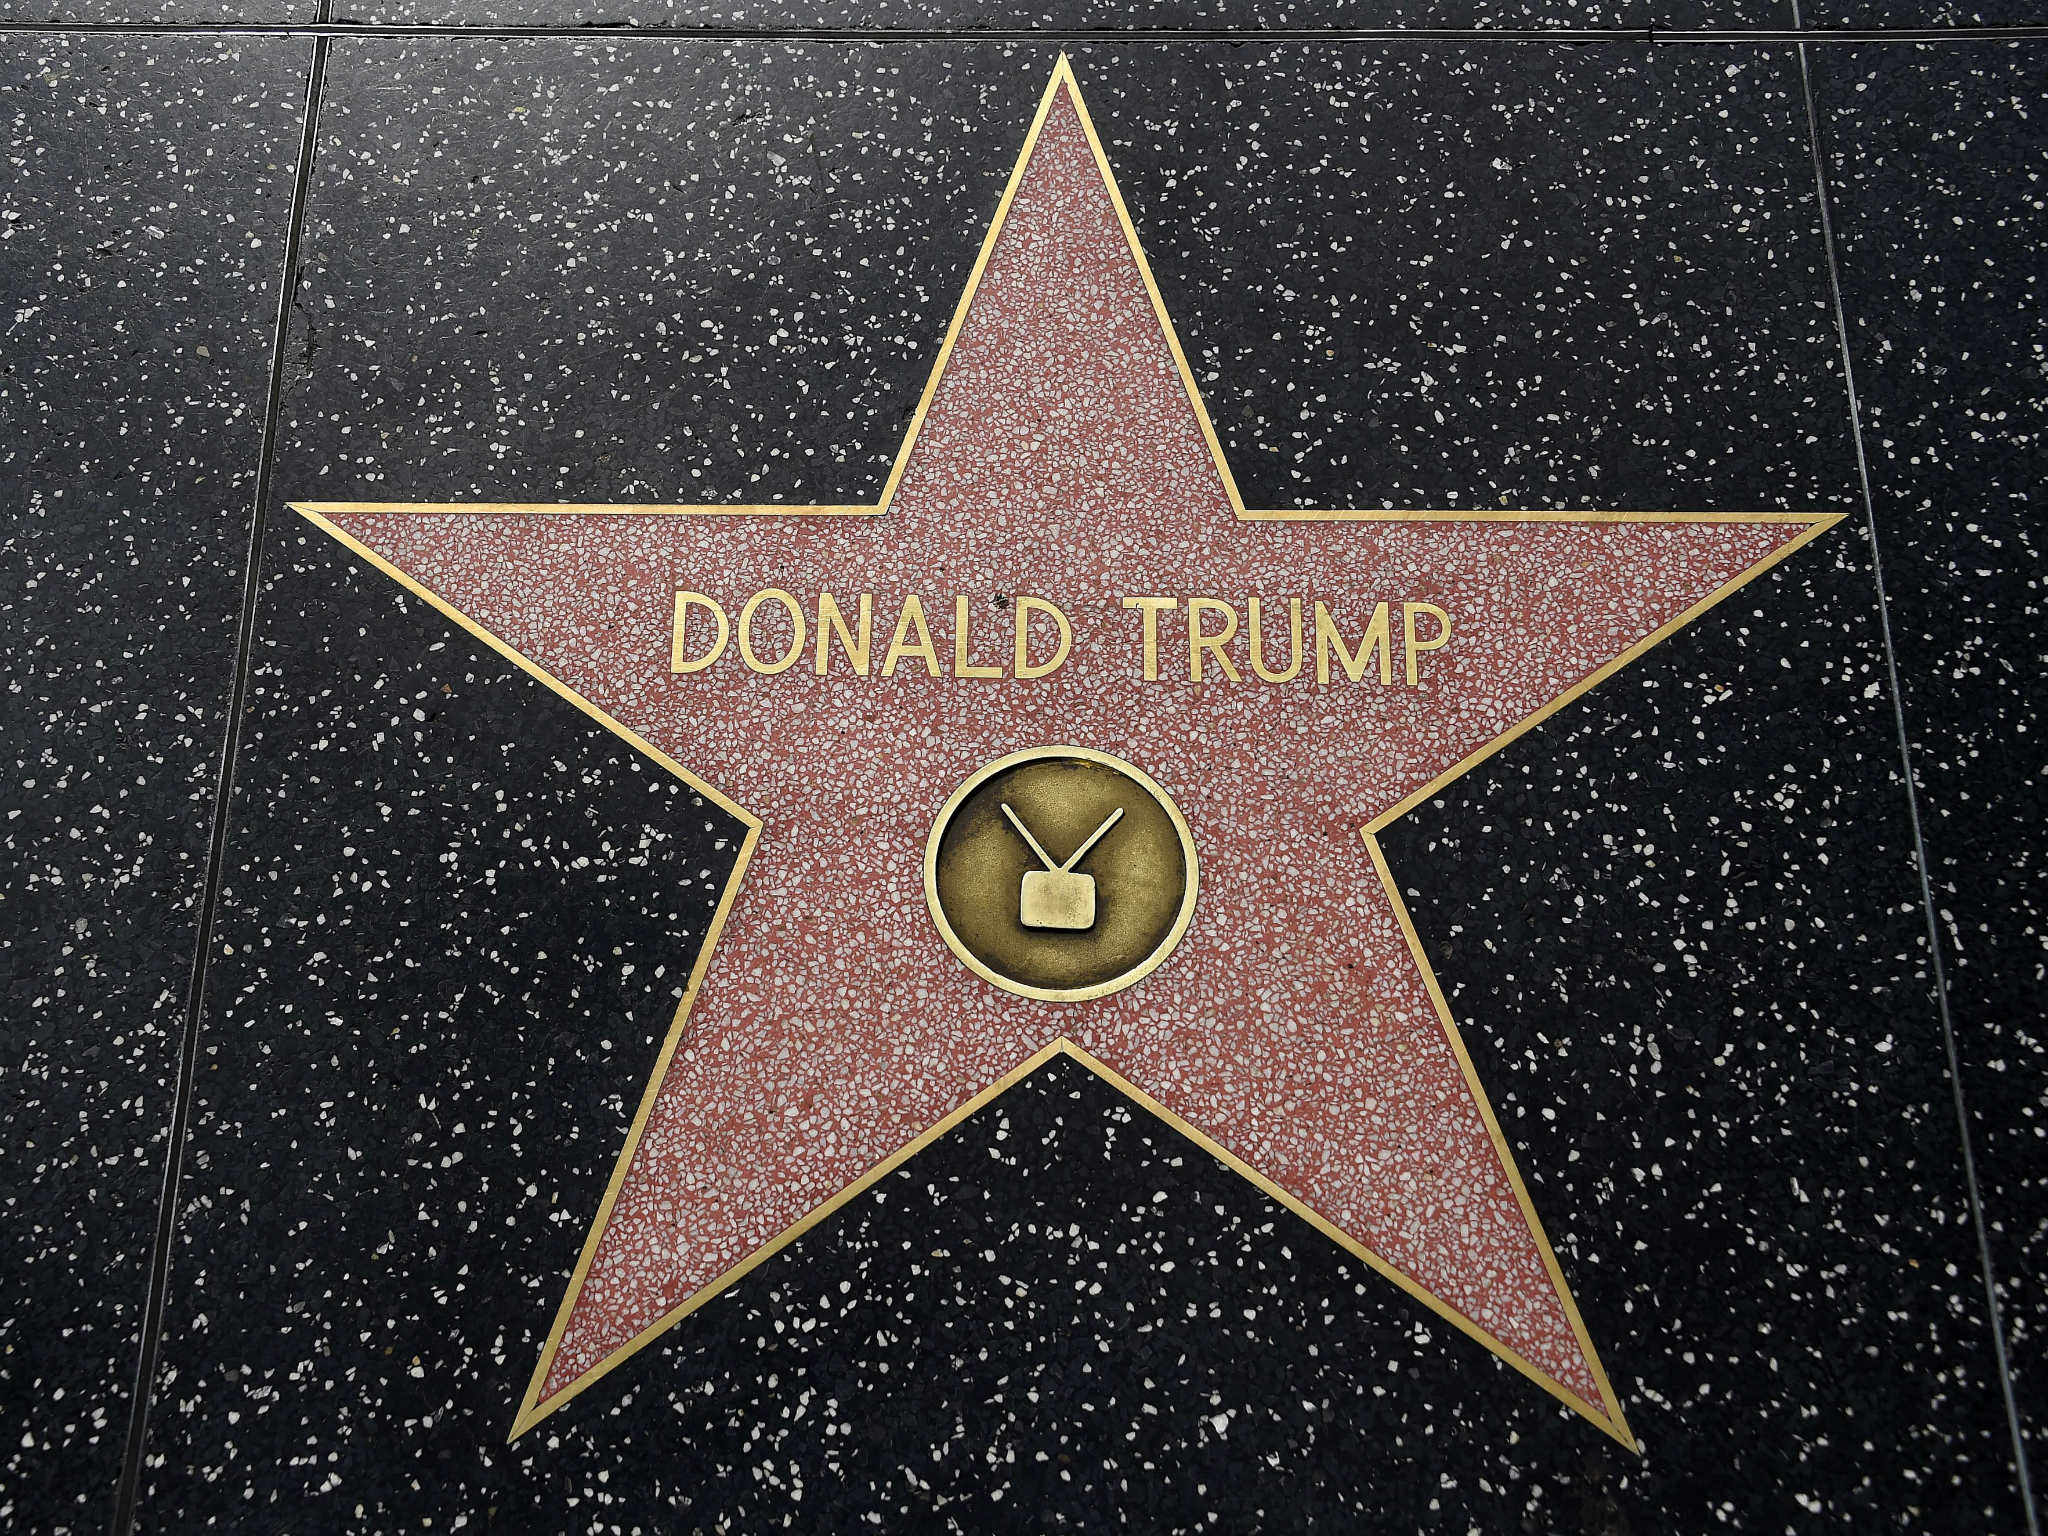 Trump's Hollywood Walk of Fame star vandalised again time